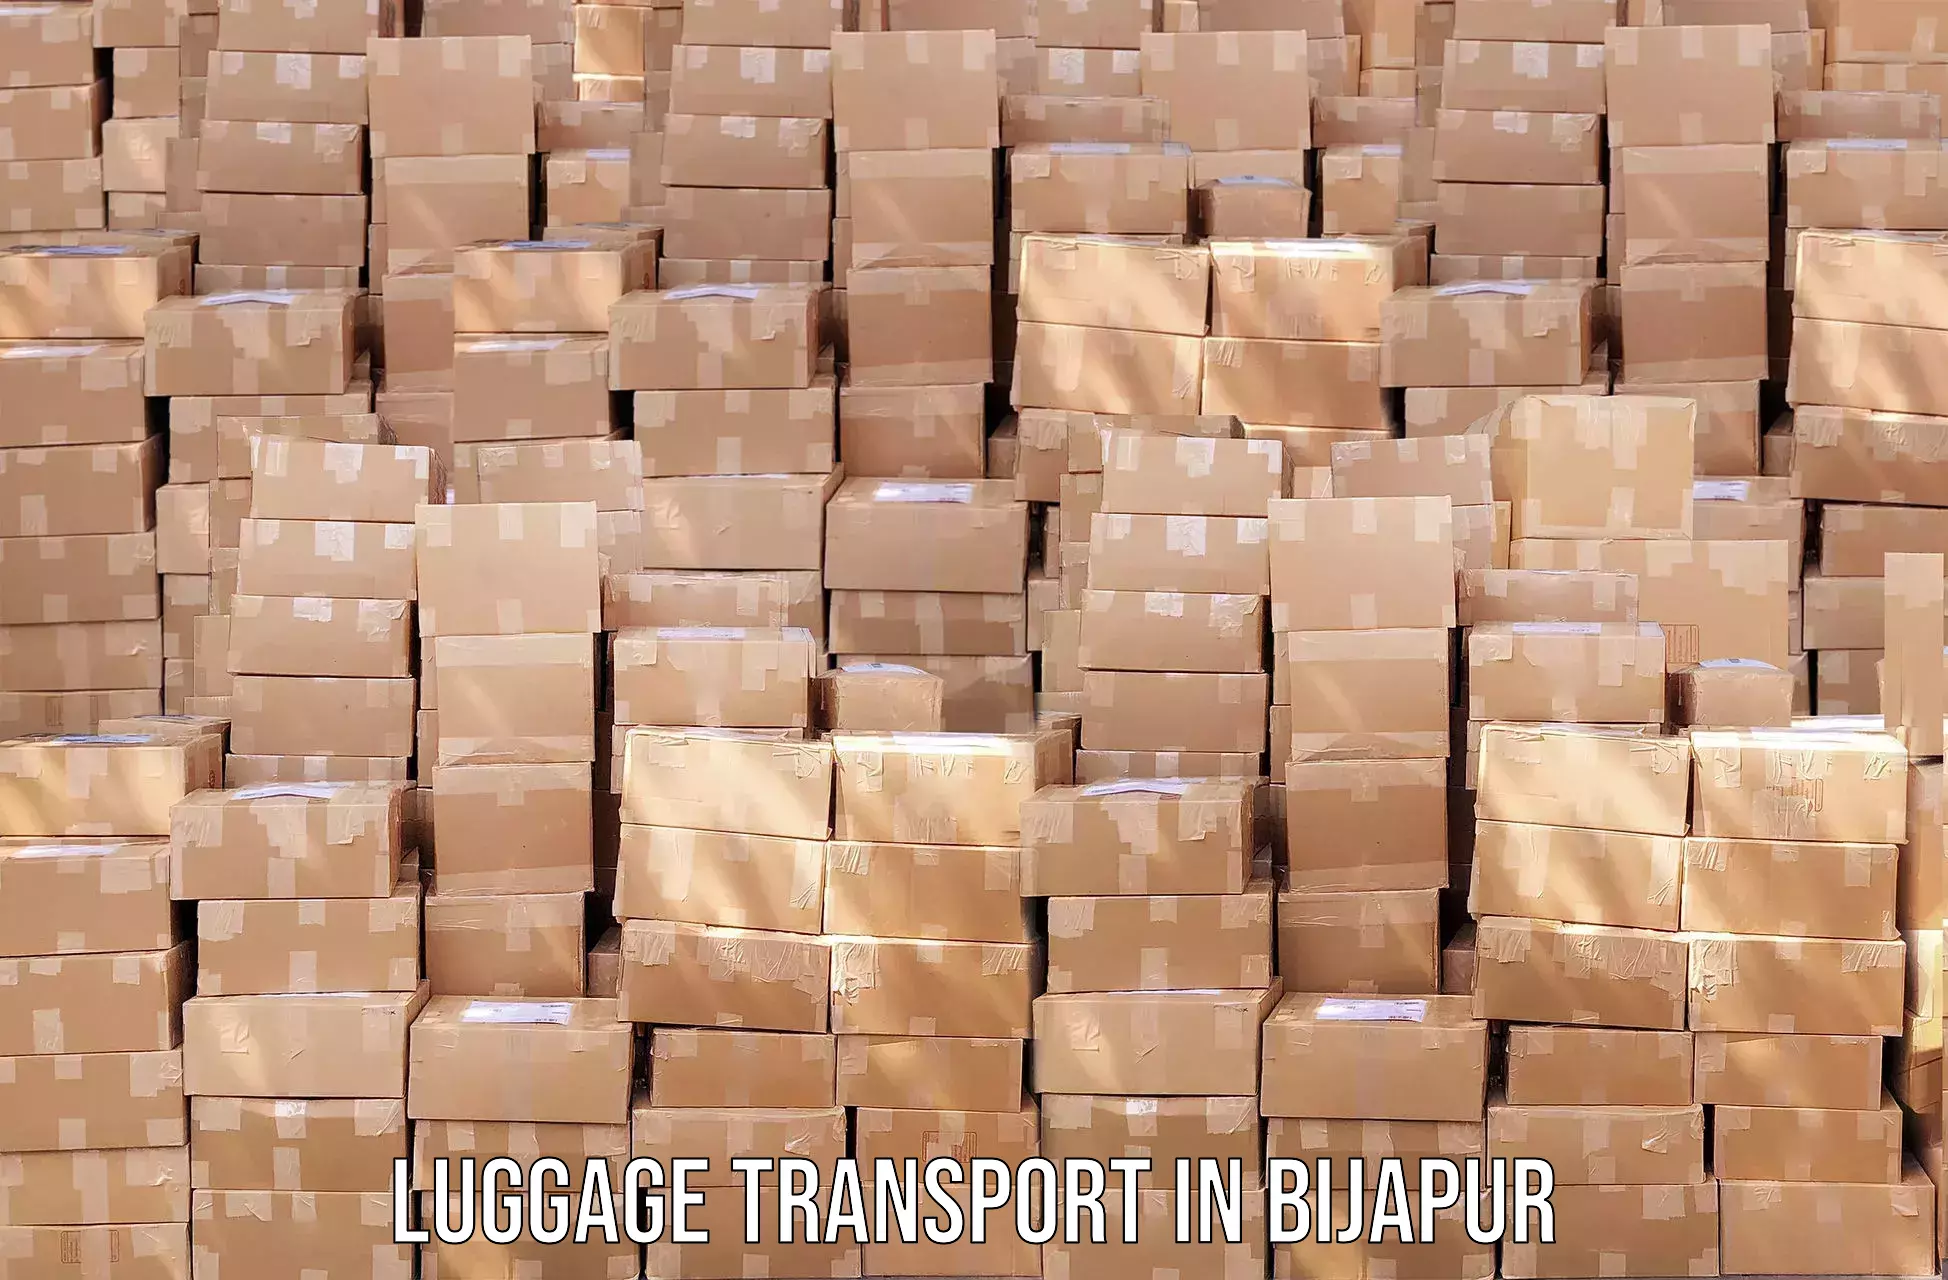 Baggage transport technology in Bijapur